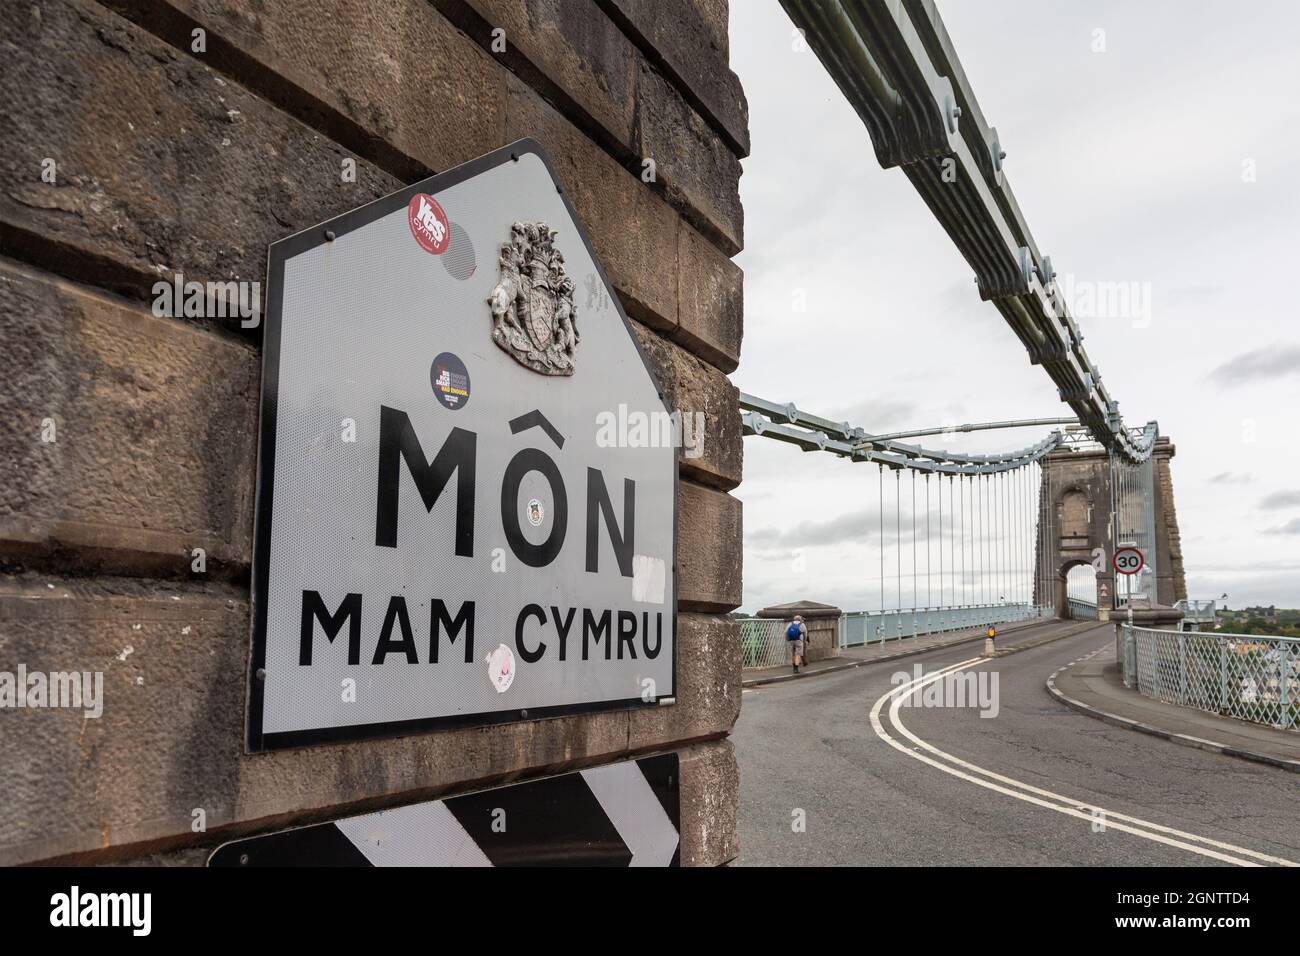 Bangor, UK: Sign on Menai Suspension Bridge - Mon Mam Cymru (Anglesey Mother of Wales) Stock Photo